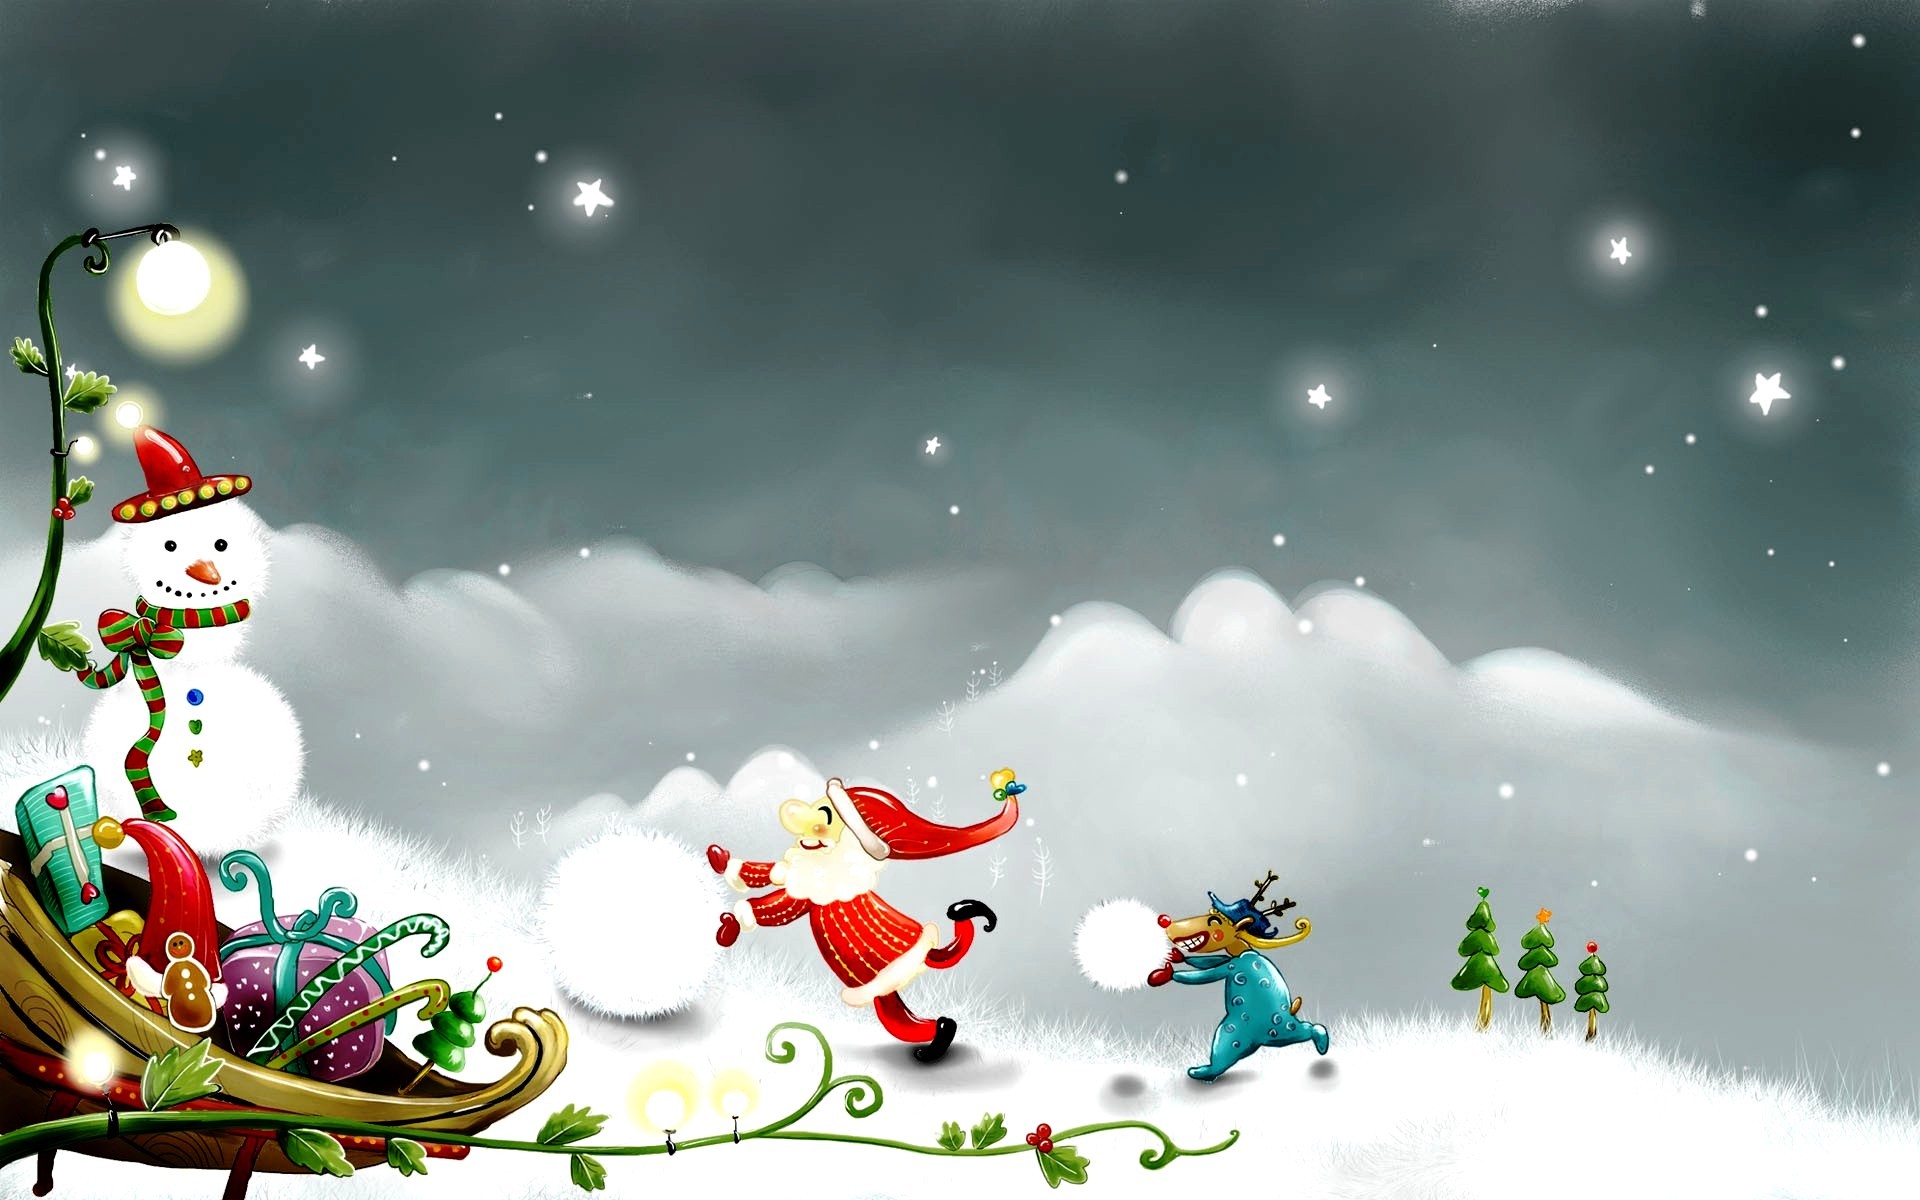 Free Download Winter Christmas Wallpaper.